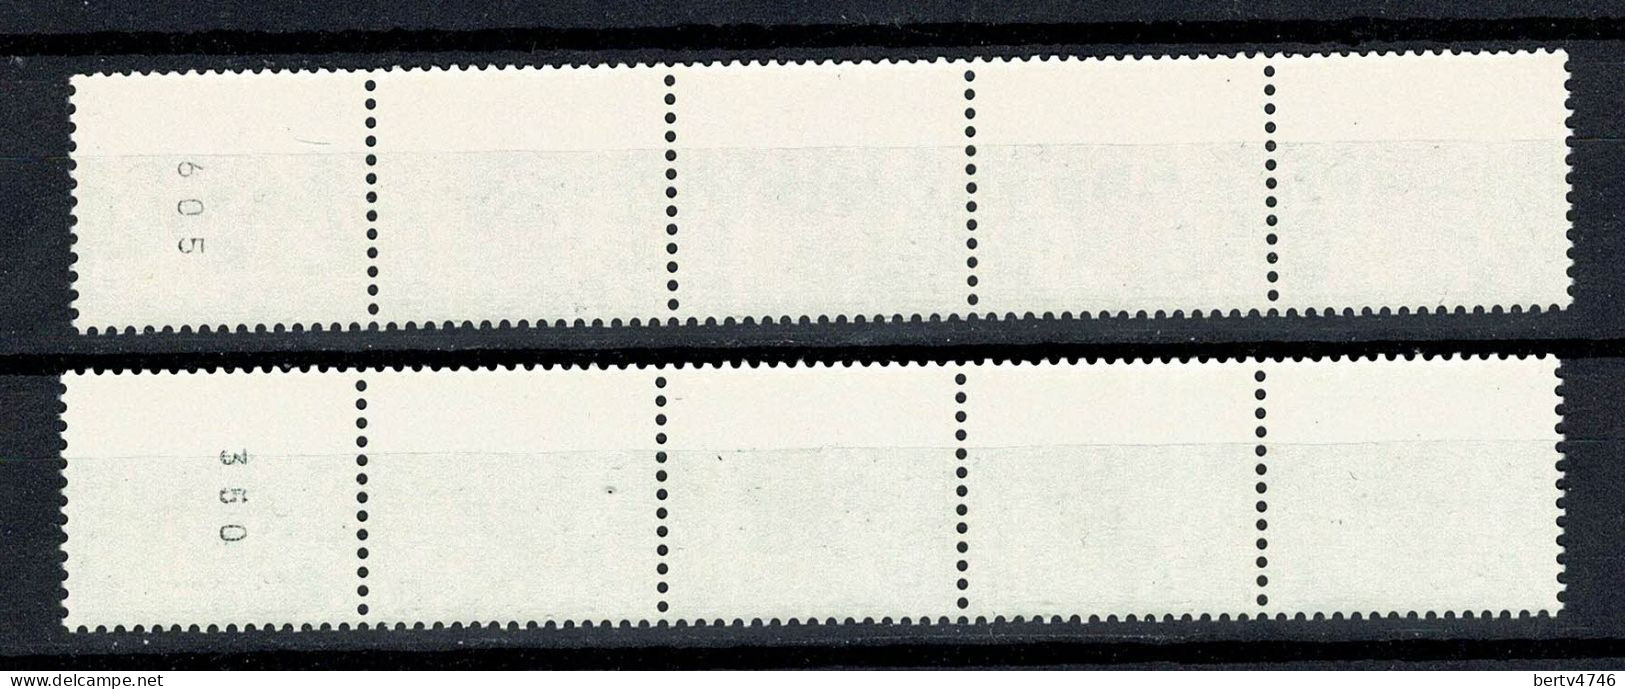 Belg. 1982  R 74**, 78** MNH (2 Scans) - Coil Stamps